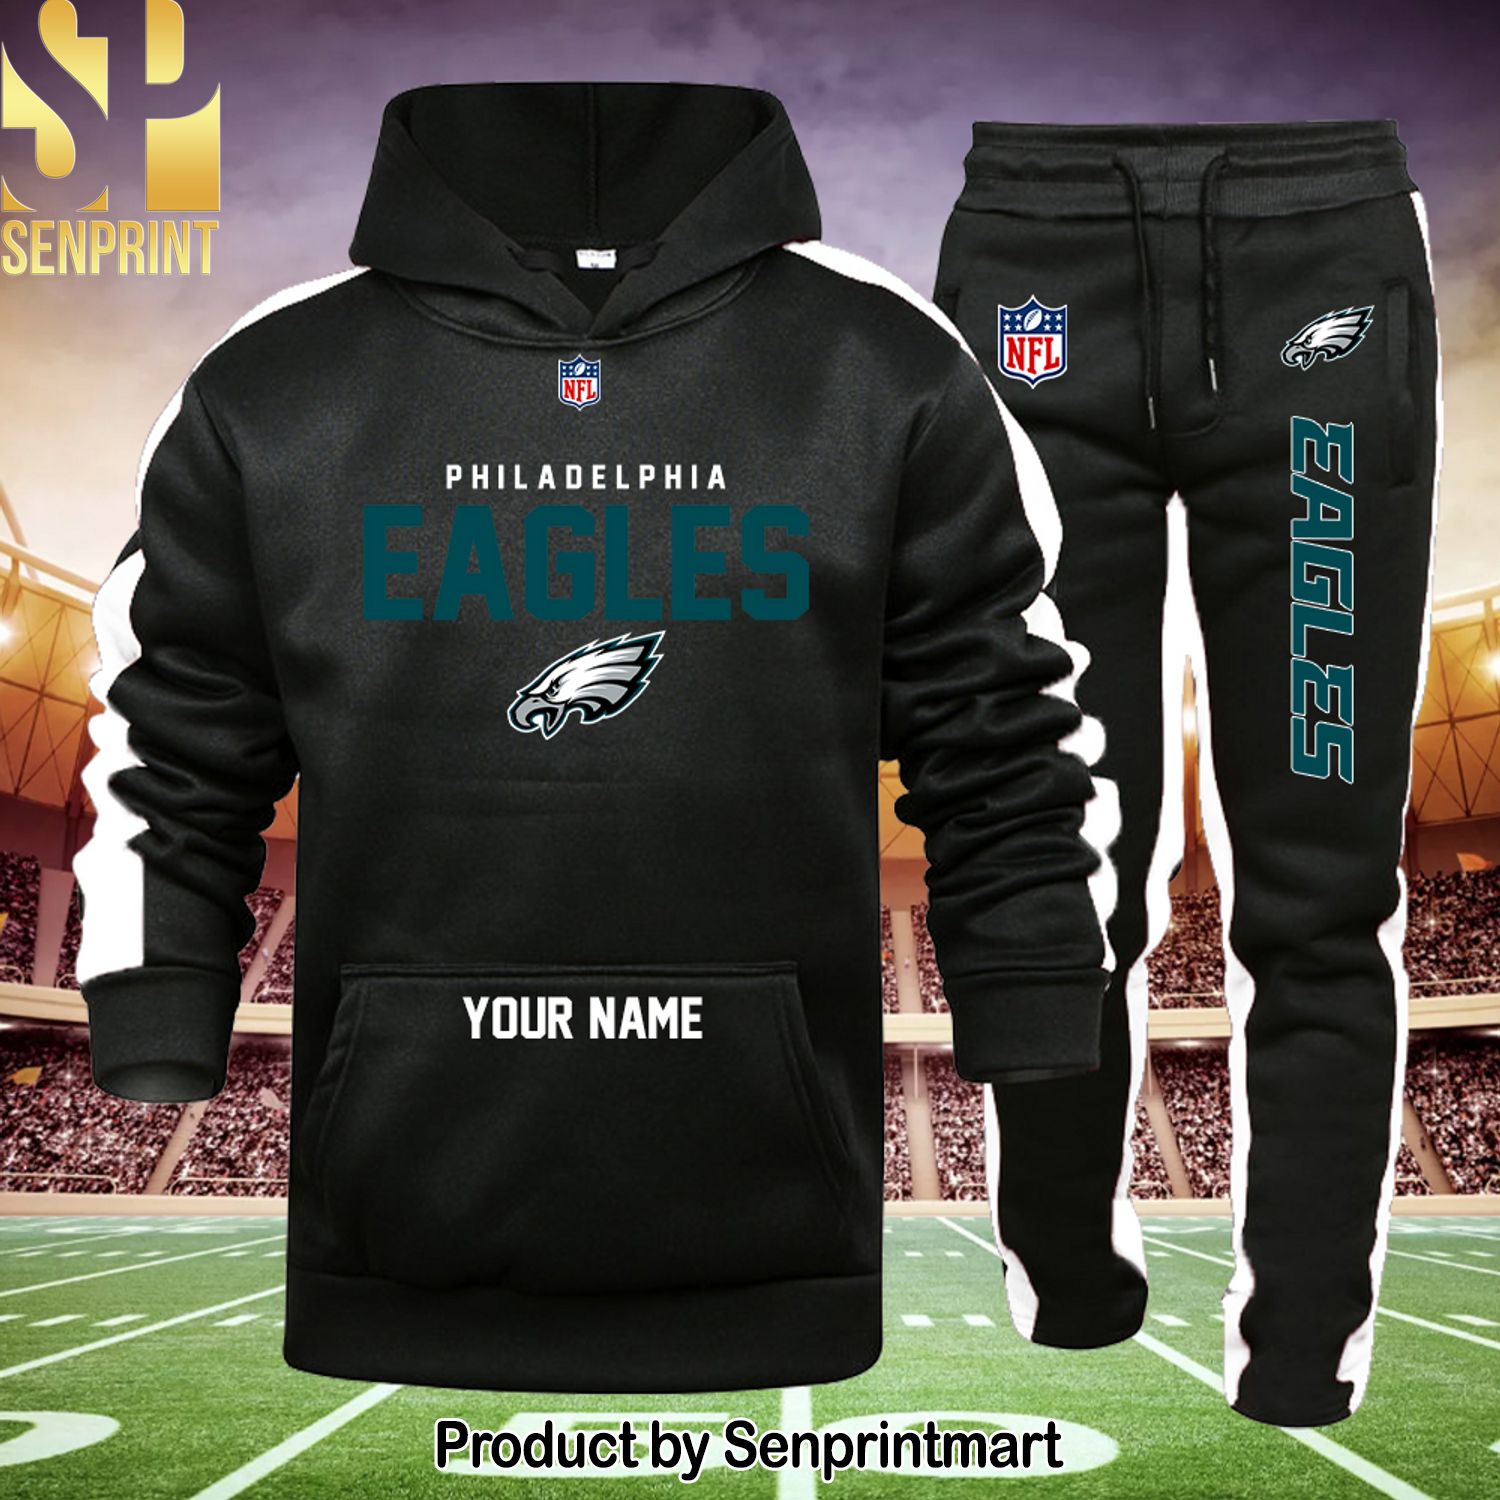 NFL Philadelphia Eagles Unisex All Over Print Shirt and Sweatpants